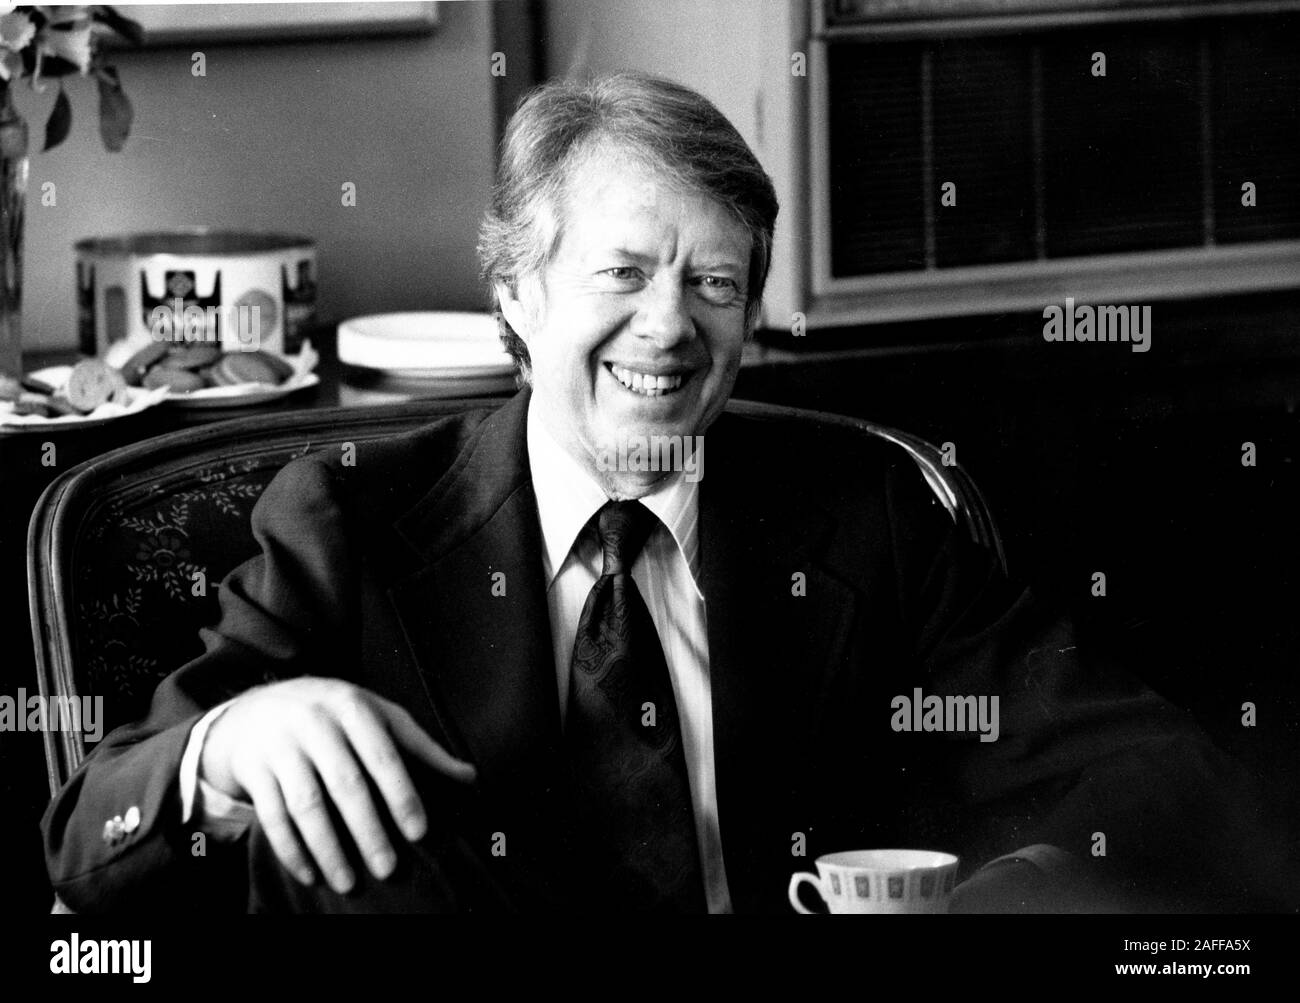 Mar. 03, 1976 - USA - Presidential hopeful, Georgia Governor JIMMY CARTER holds a cup of tea or coffee. Exact place unknown. (Credit Image: © Keystone Press Agency/Keystone USA via ZUMAPRESS.com) Stock Photo